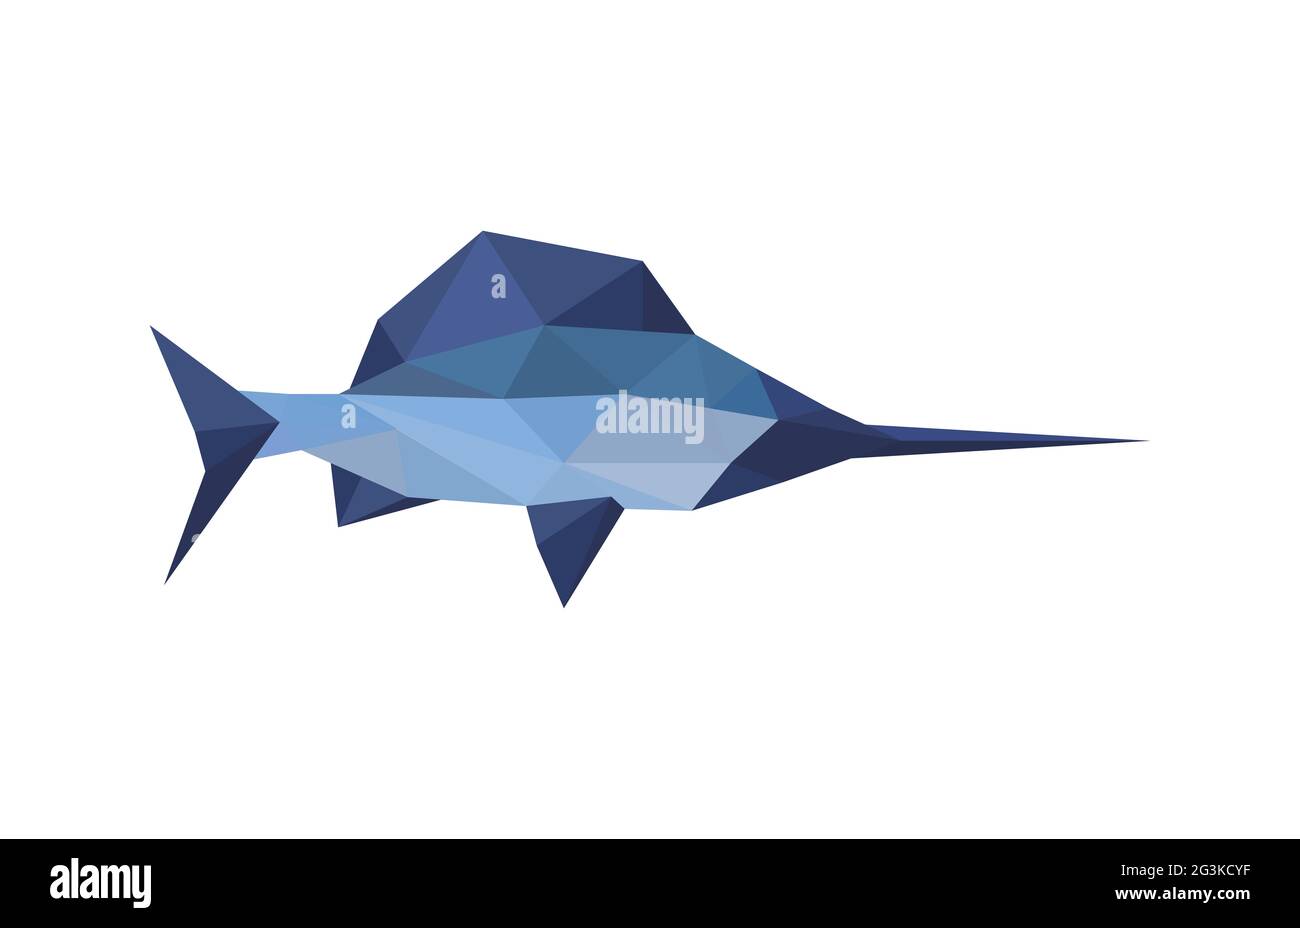 Illustration of origami sword fish Stock Photo